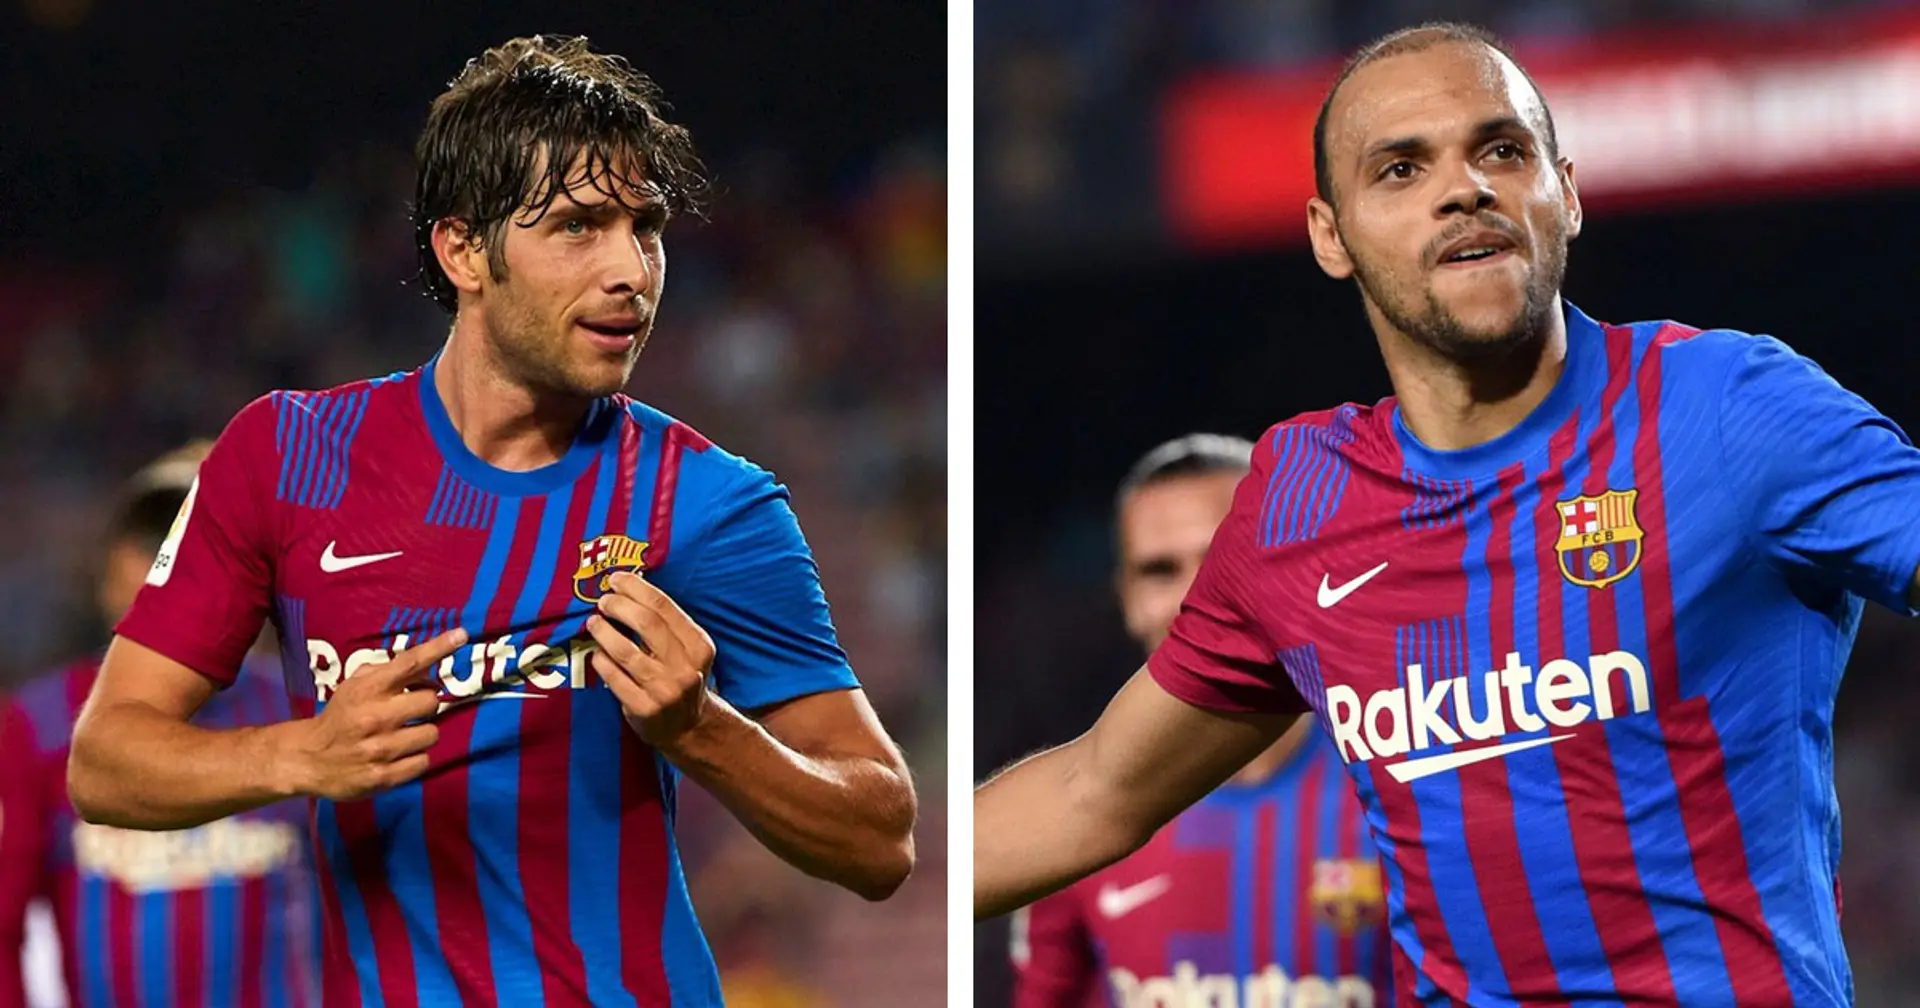 OFFICIEL: Barcelone confirme les blessures de Sergi Roberto et Braithwaite